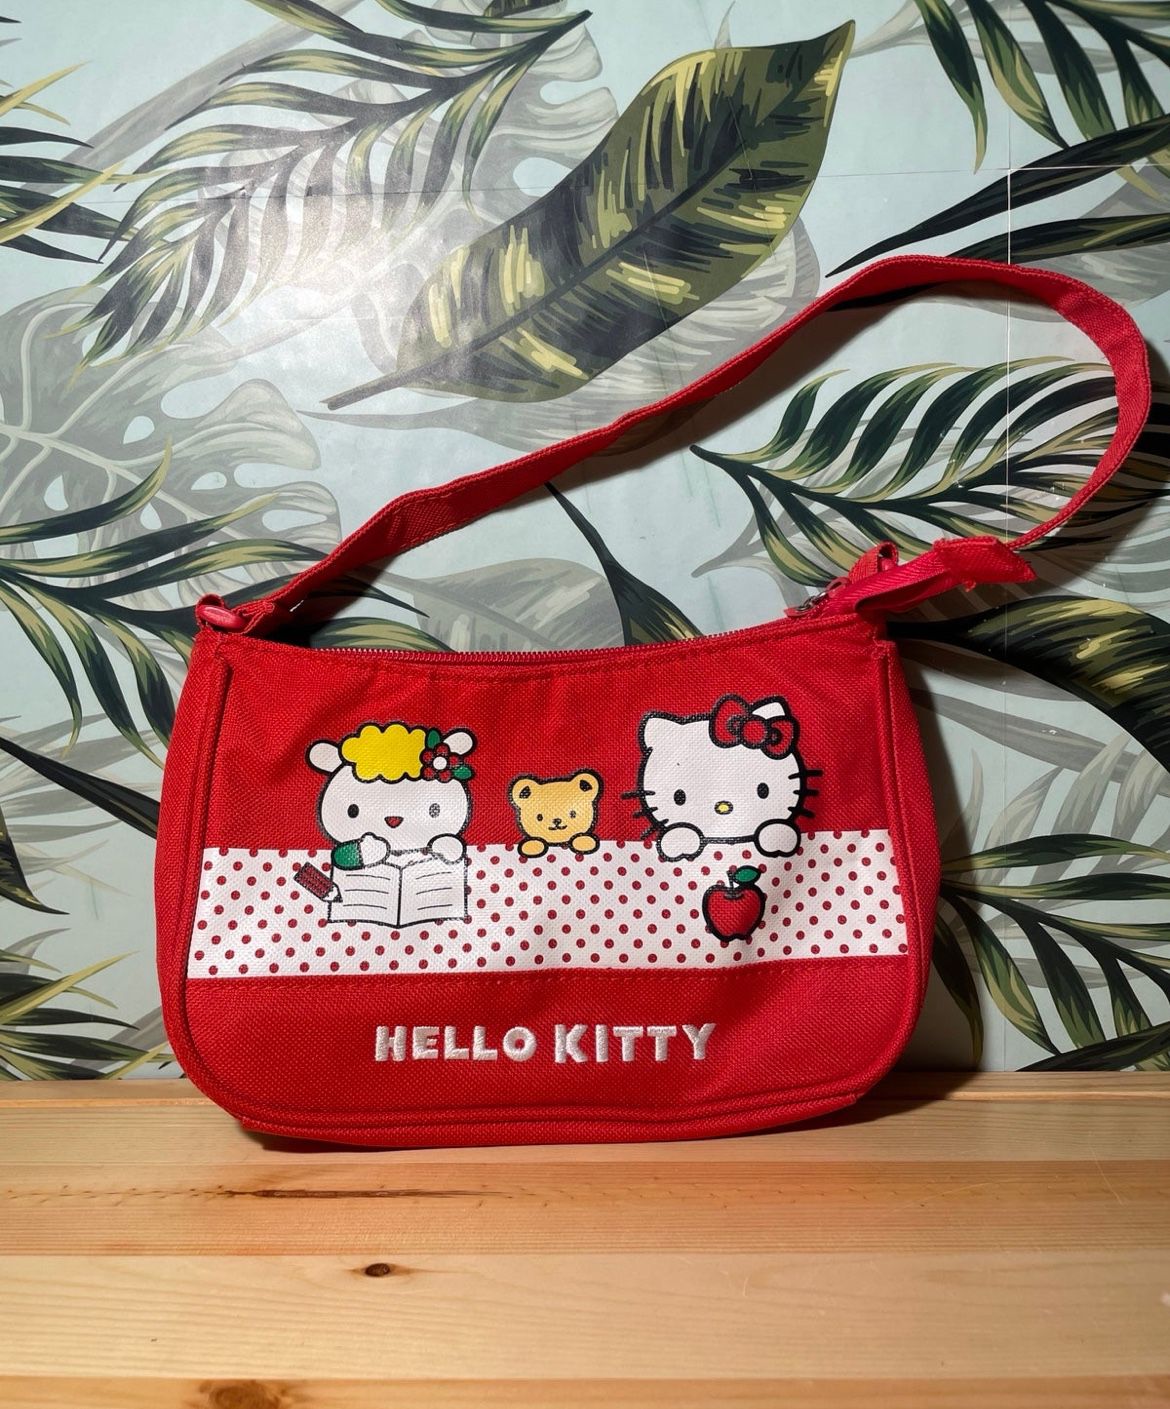 Red Vintage Hello Kitty Purse